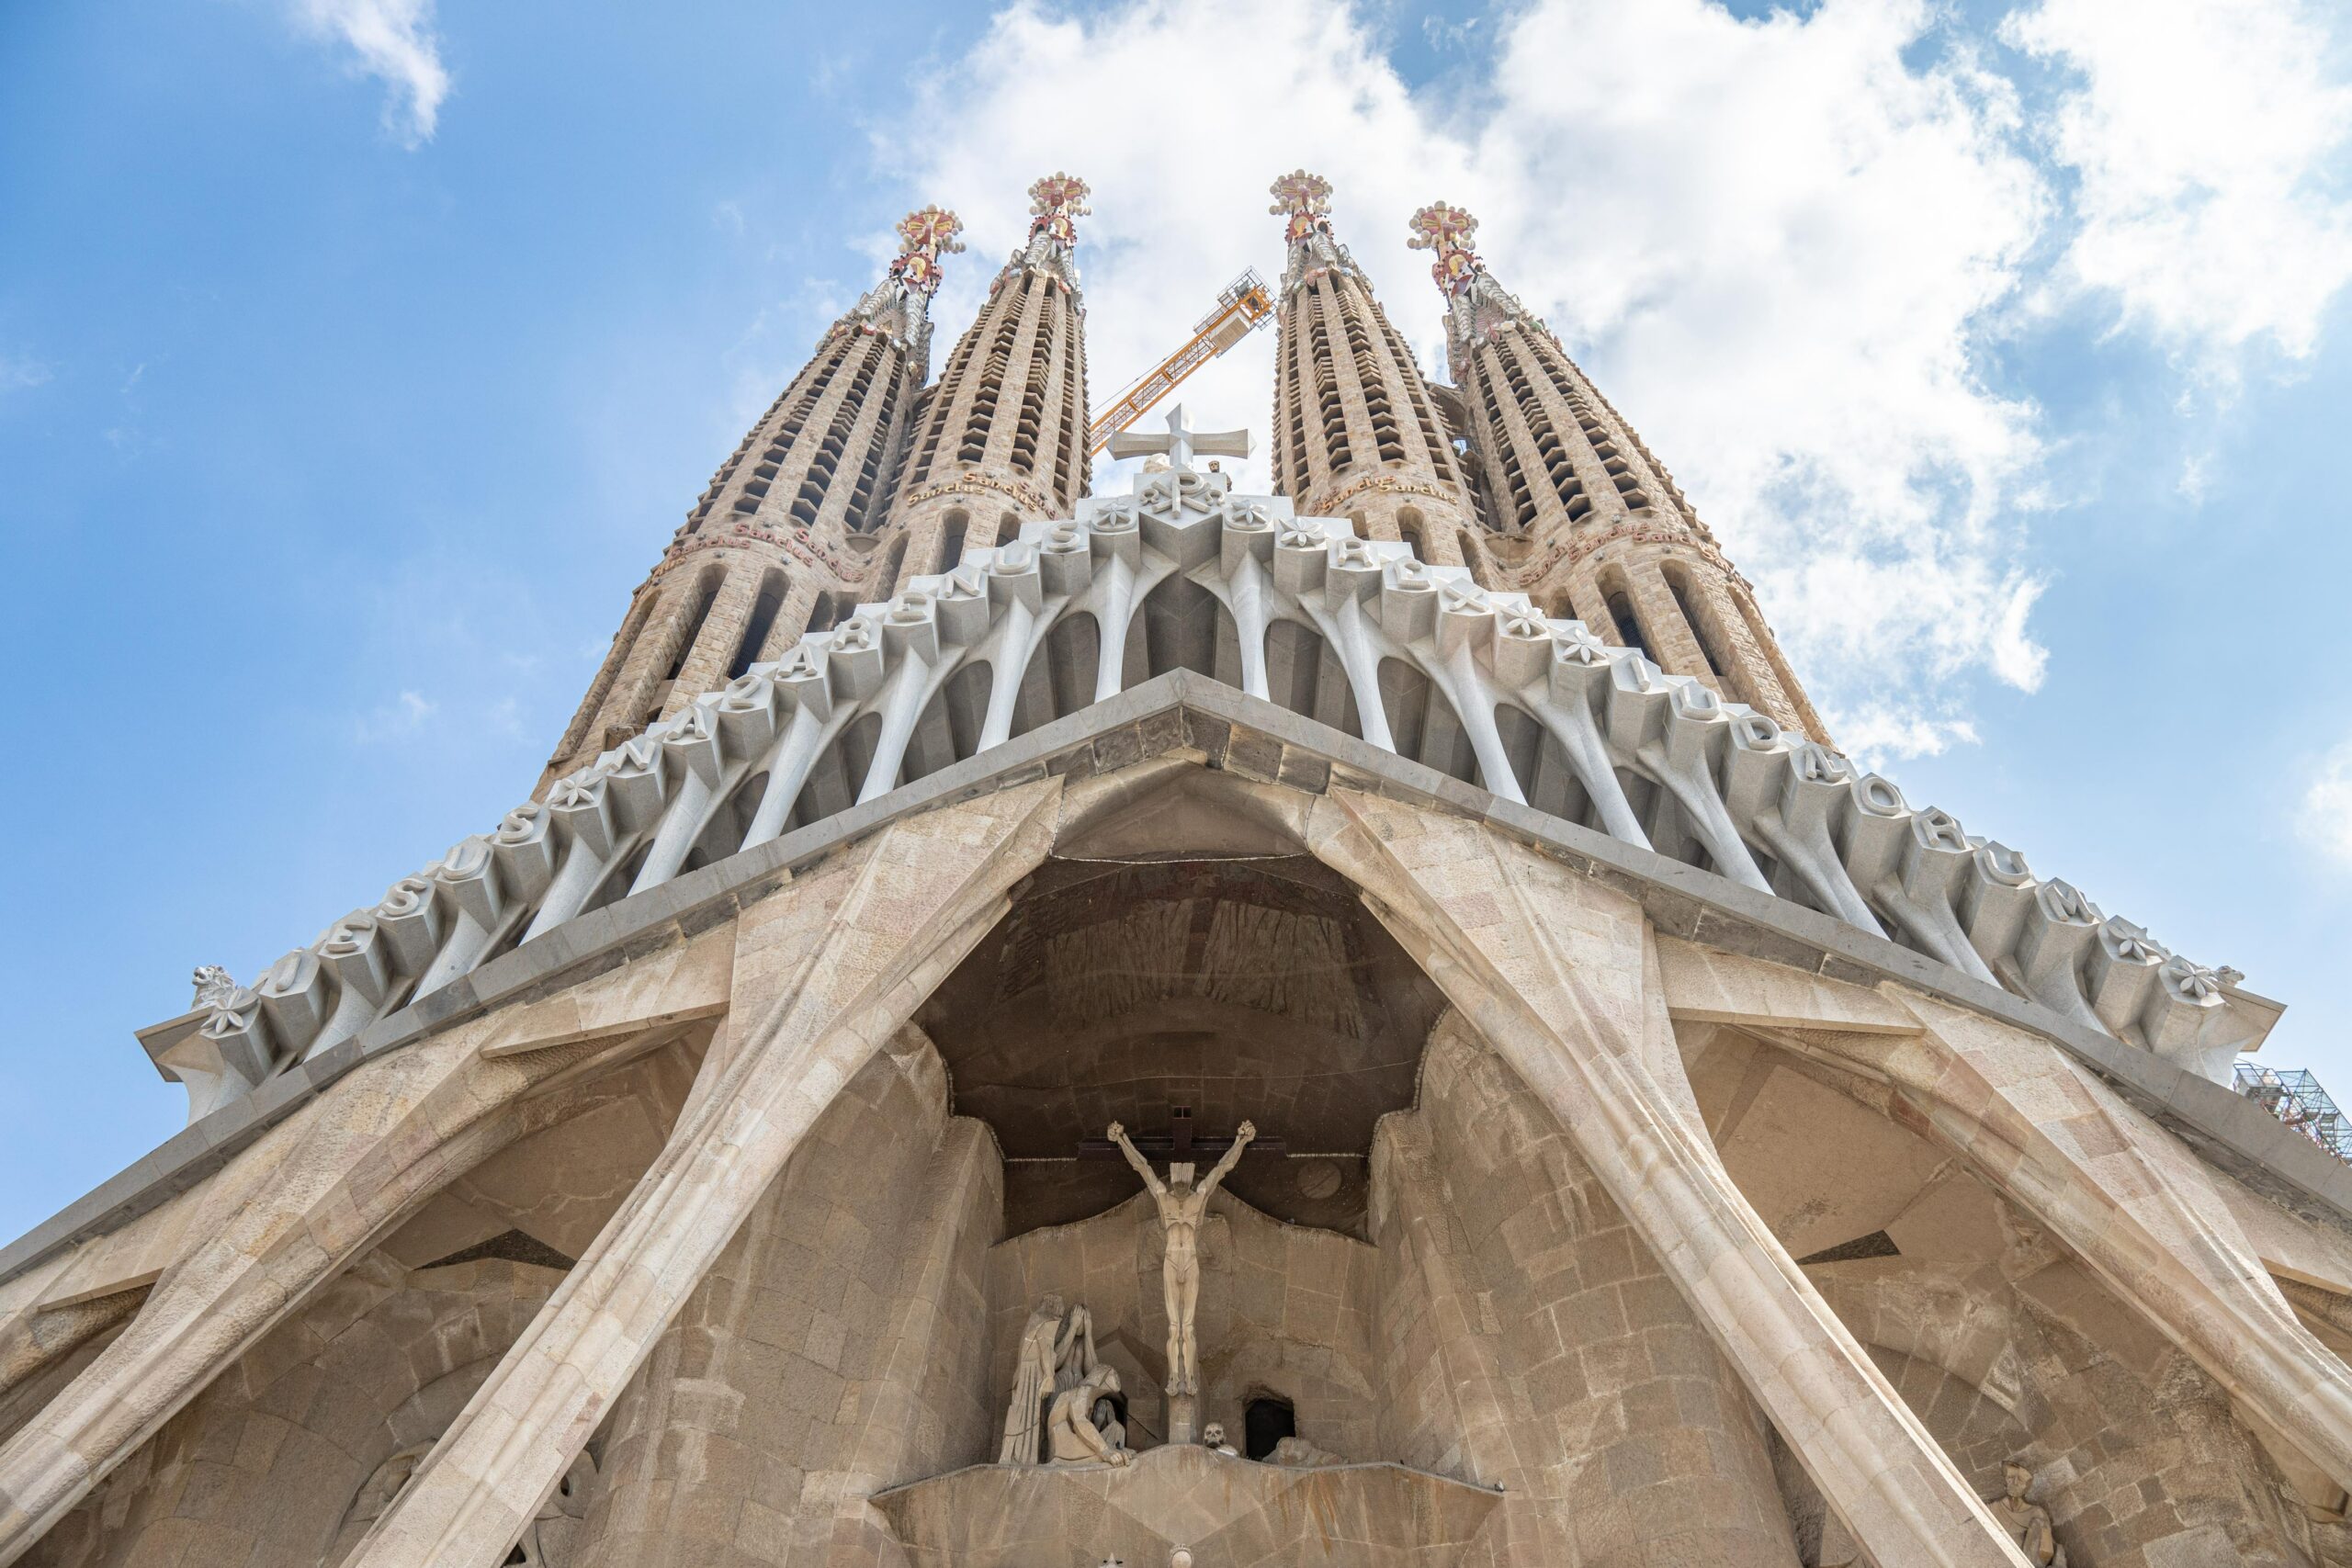 The entrance of La Sagrada Familia looking up